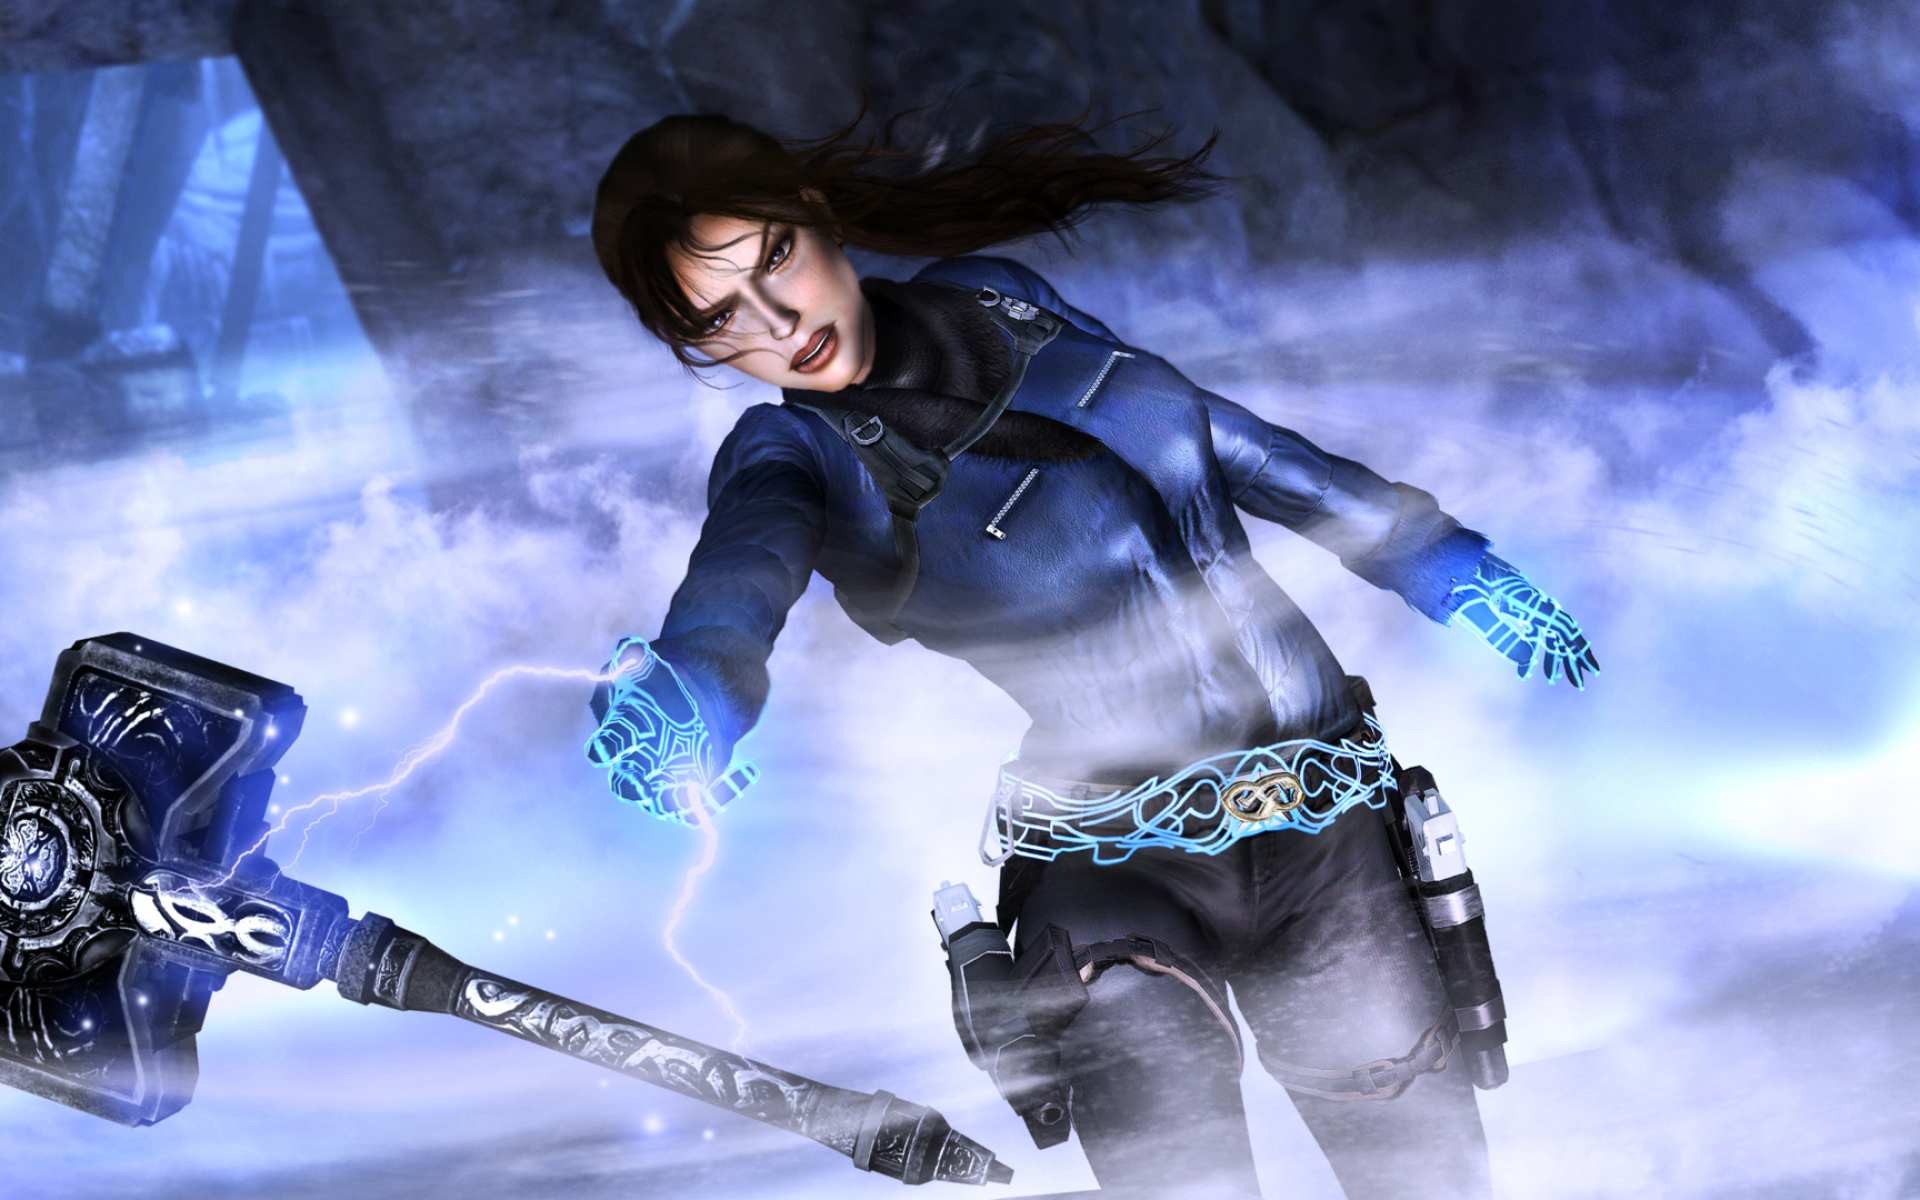 Lara Croft in Underworld, Tomb Raider wallpaper, Adventurous spirit, Daring quests, 1920x1200 HD Desktop